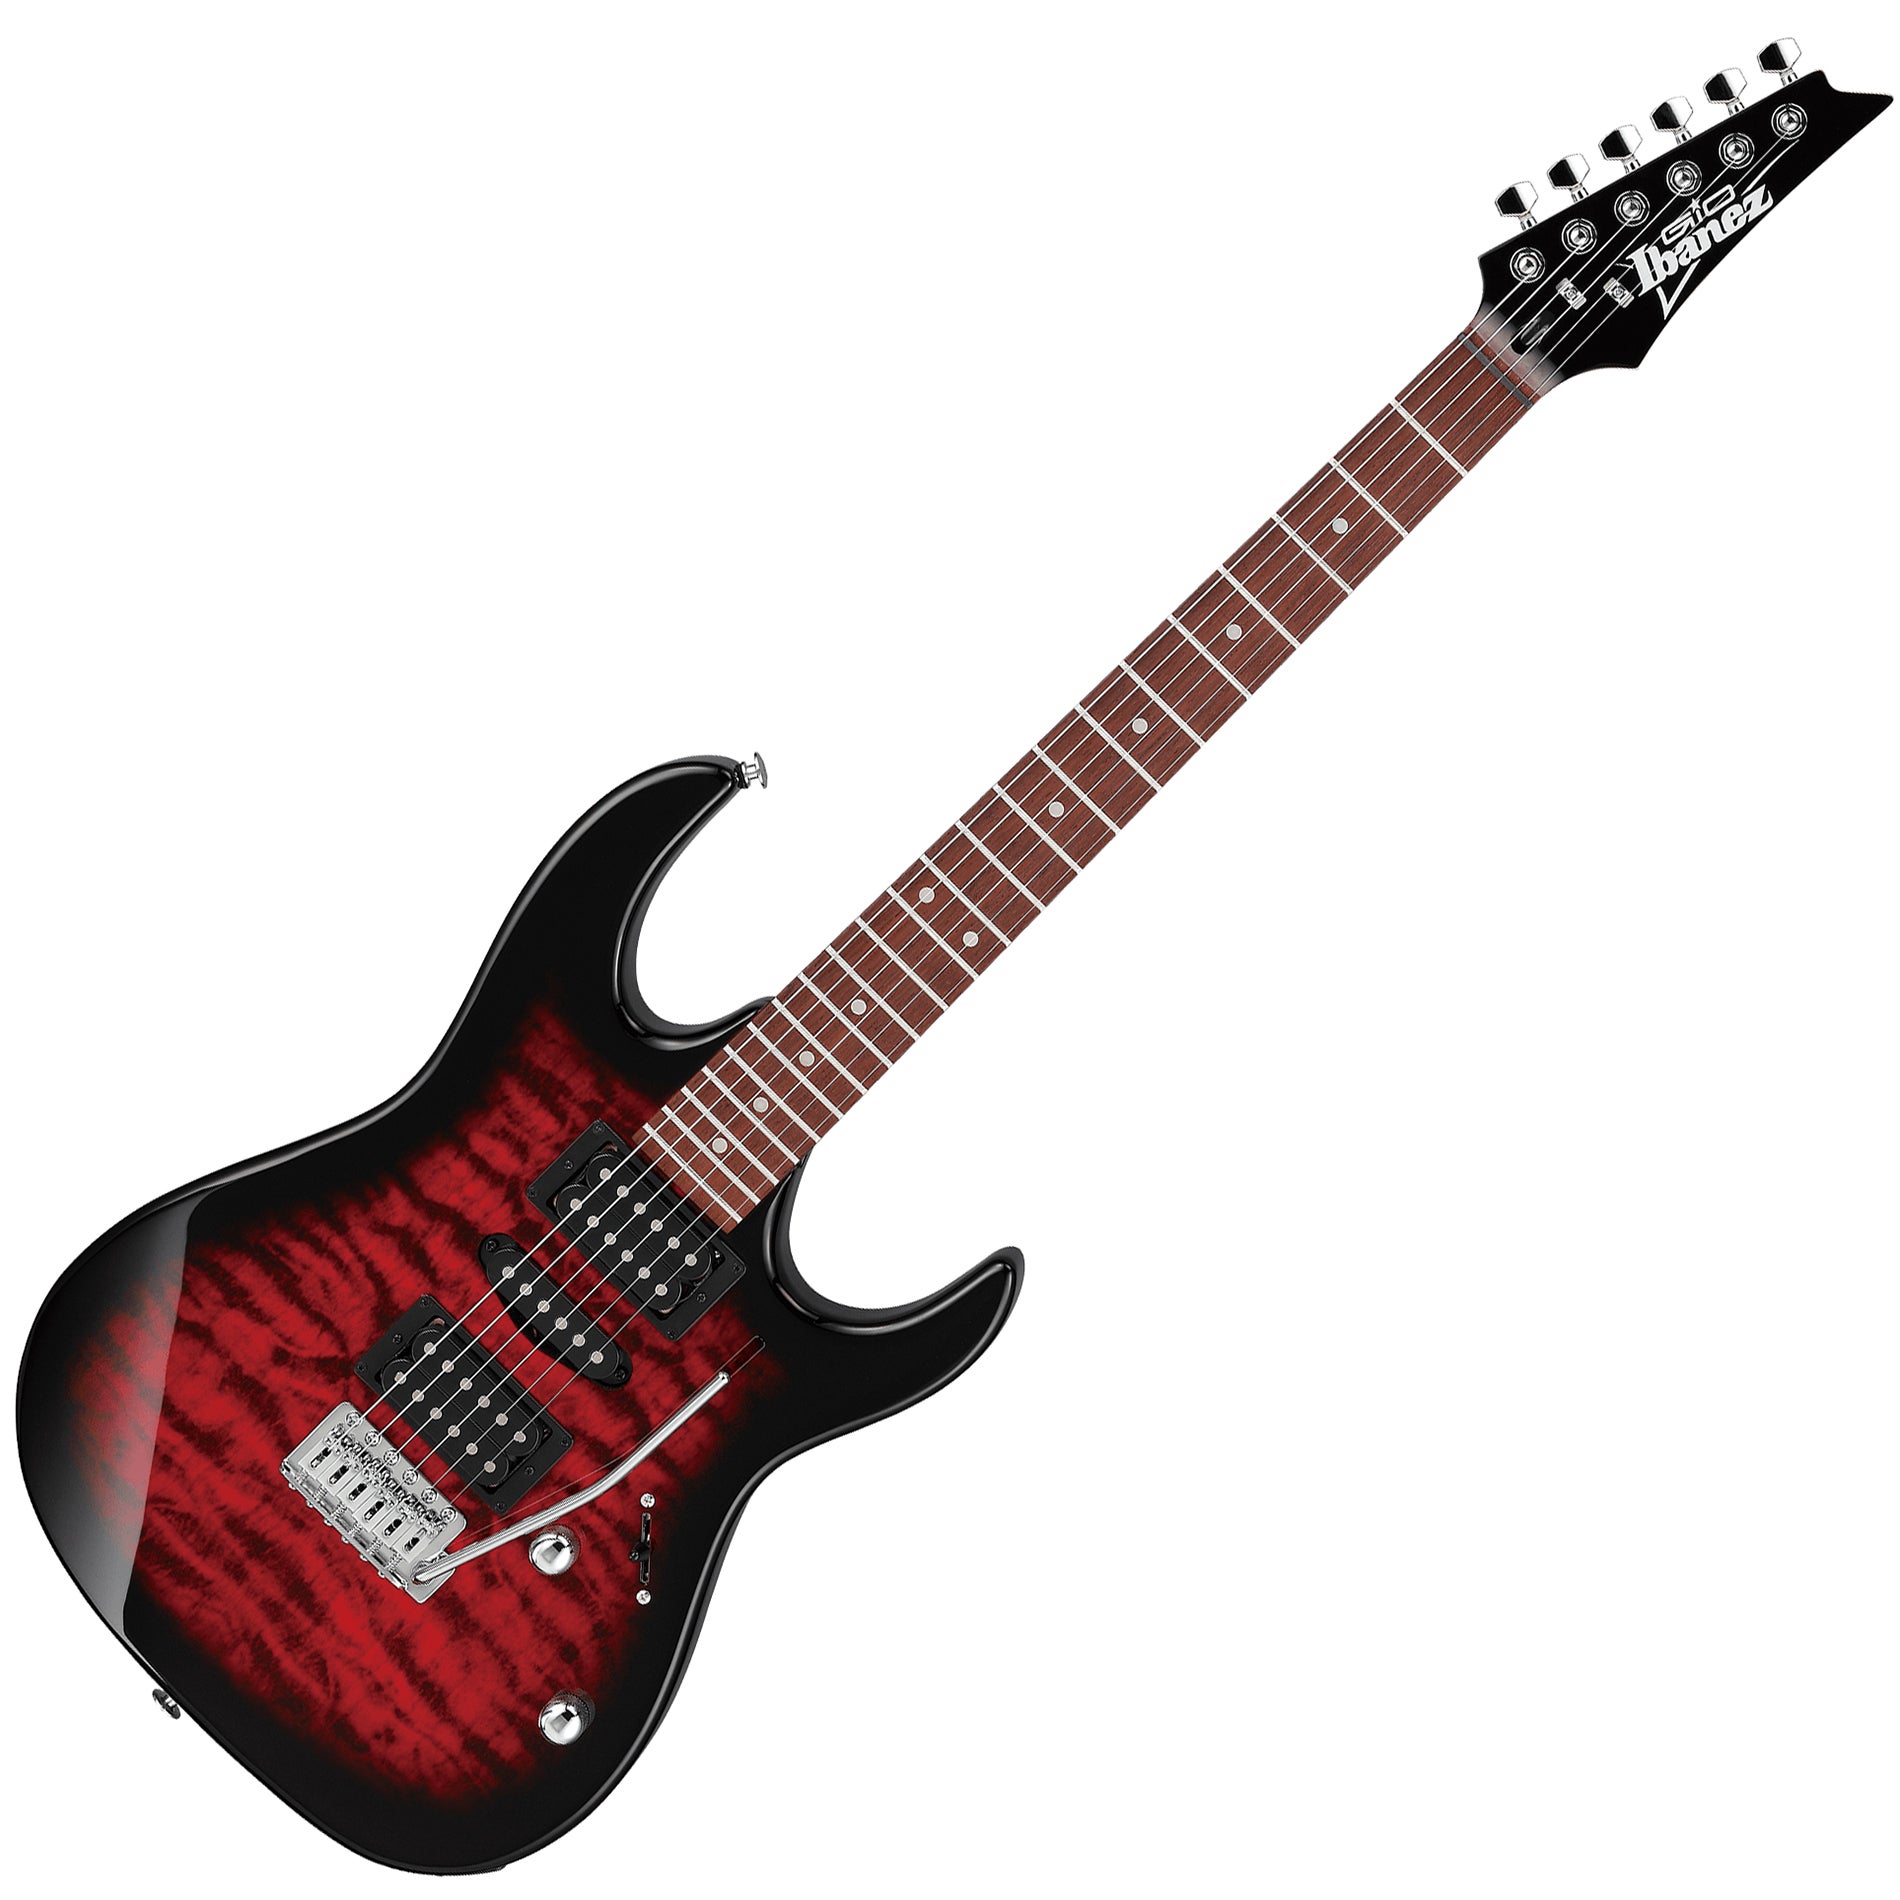 Ibanez Gio Grx70qa Solidbody Electric Guitar - Transparent Red 